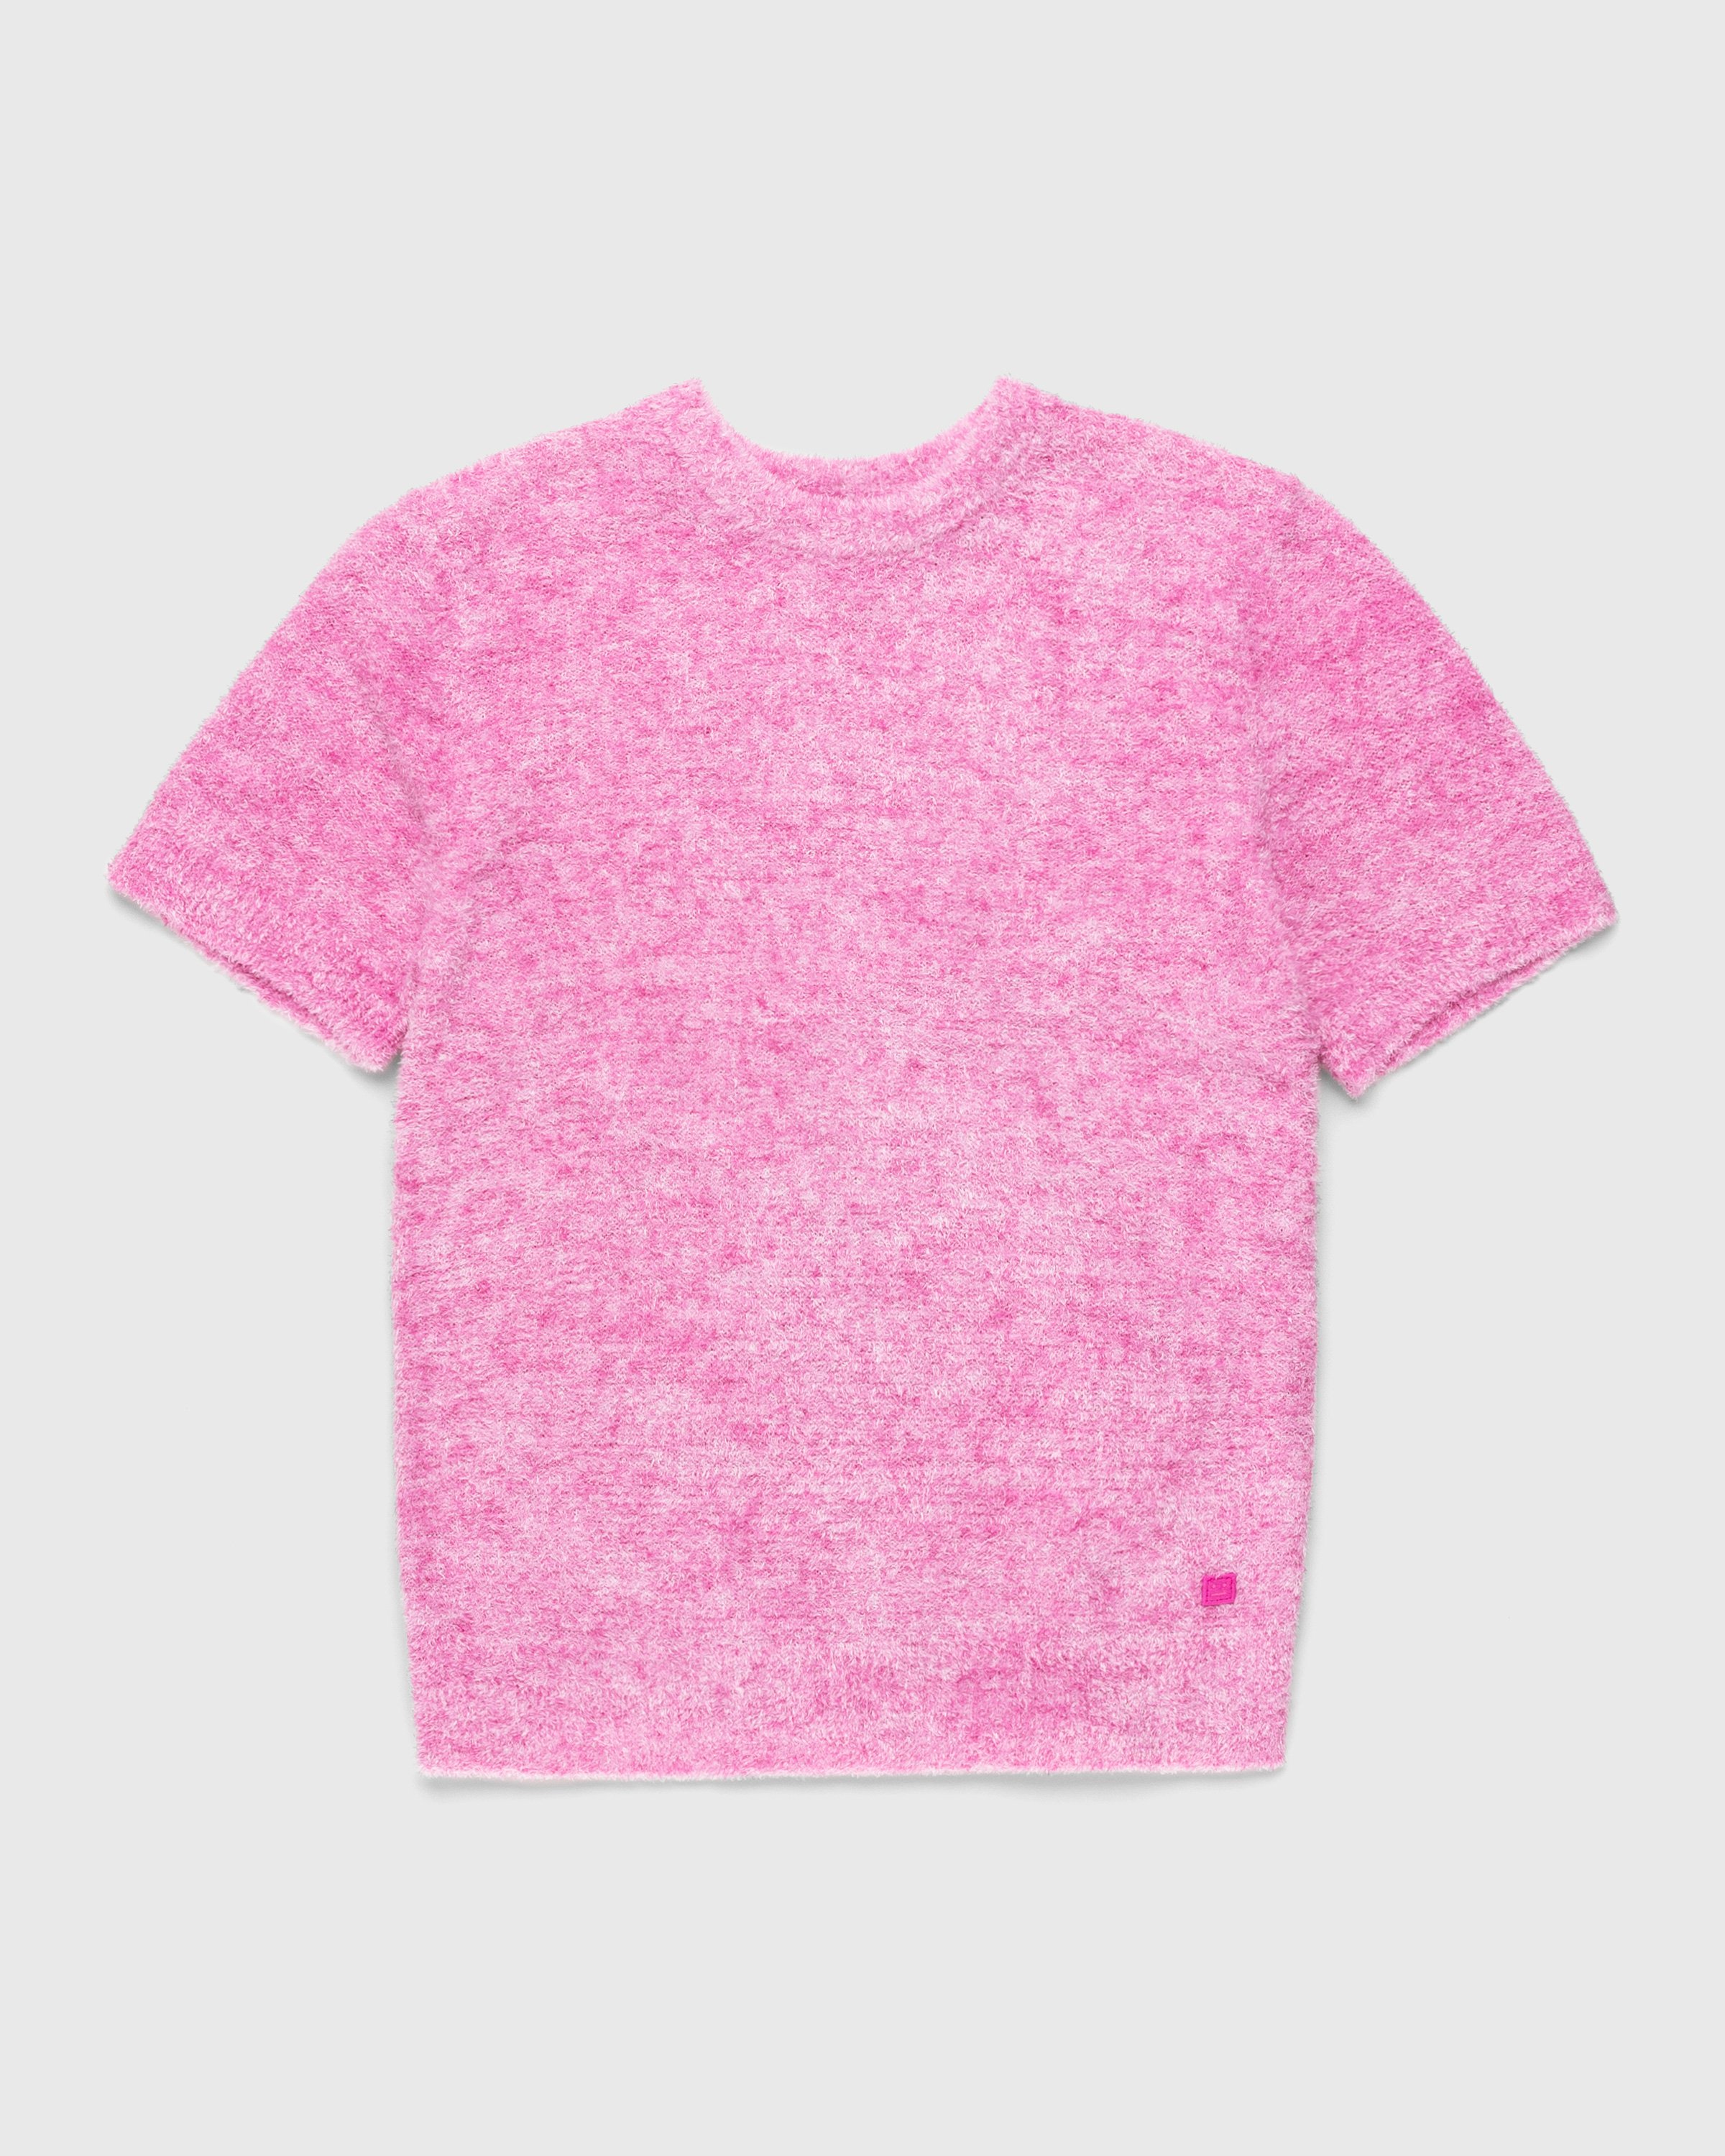 Acne Studios - Short-Sleeve Crewneck Sweater Pink - Clothing - Pink - Image 1